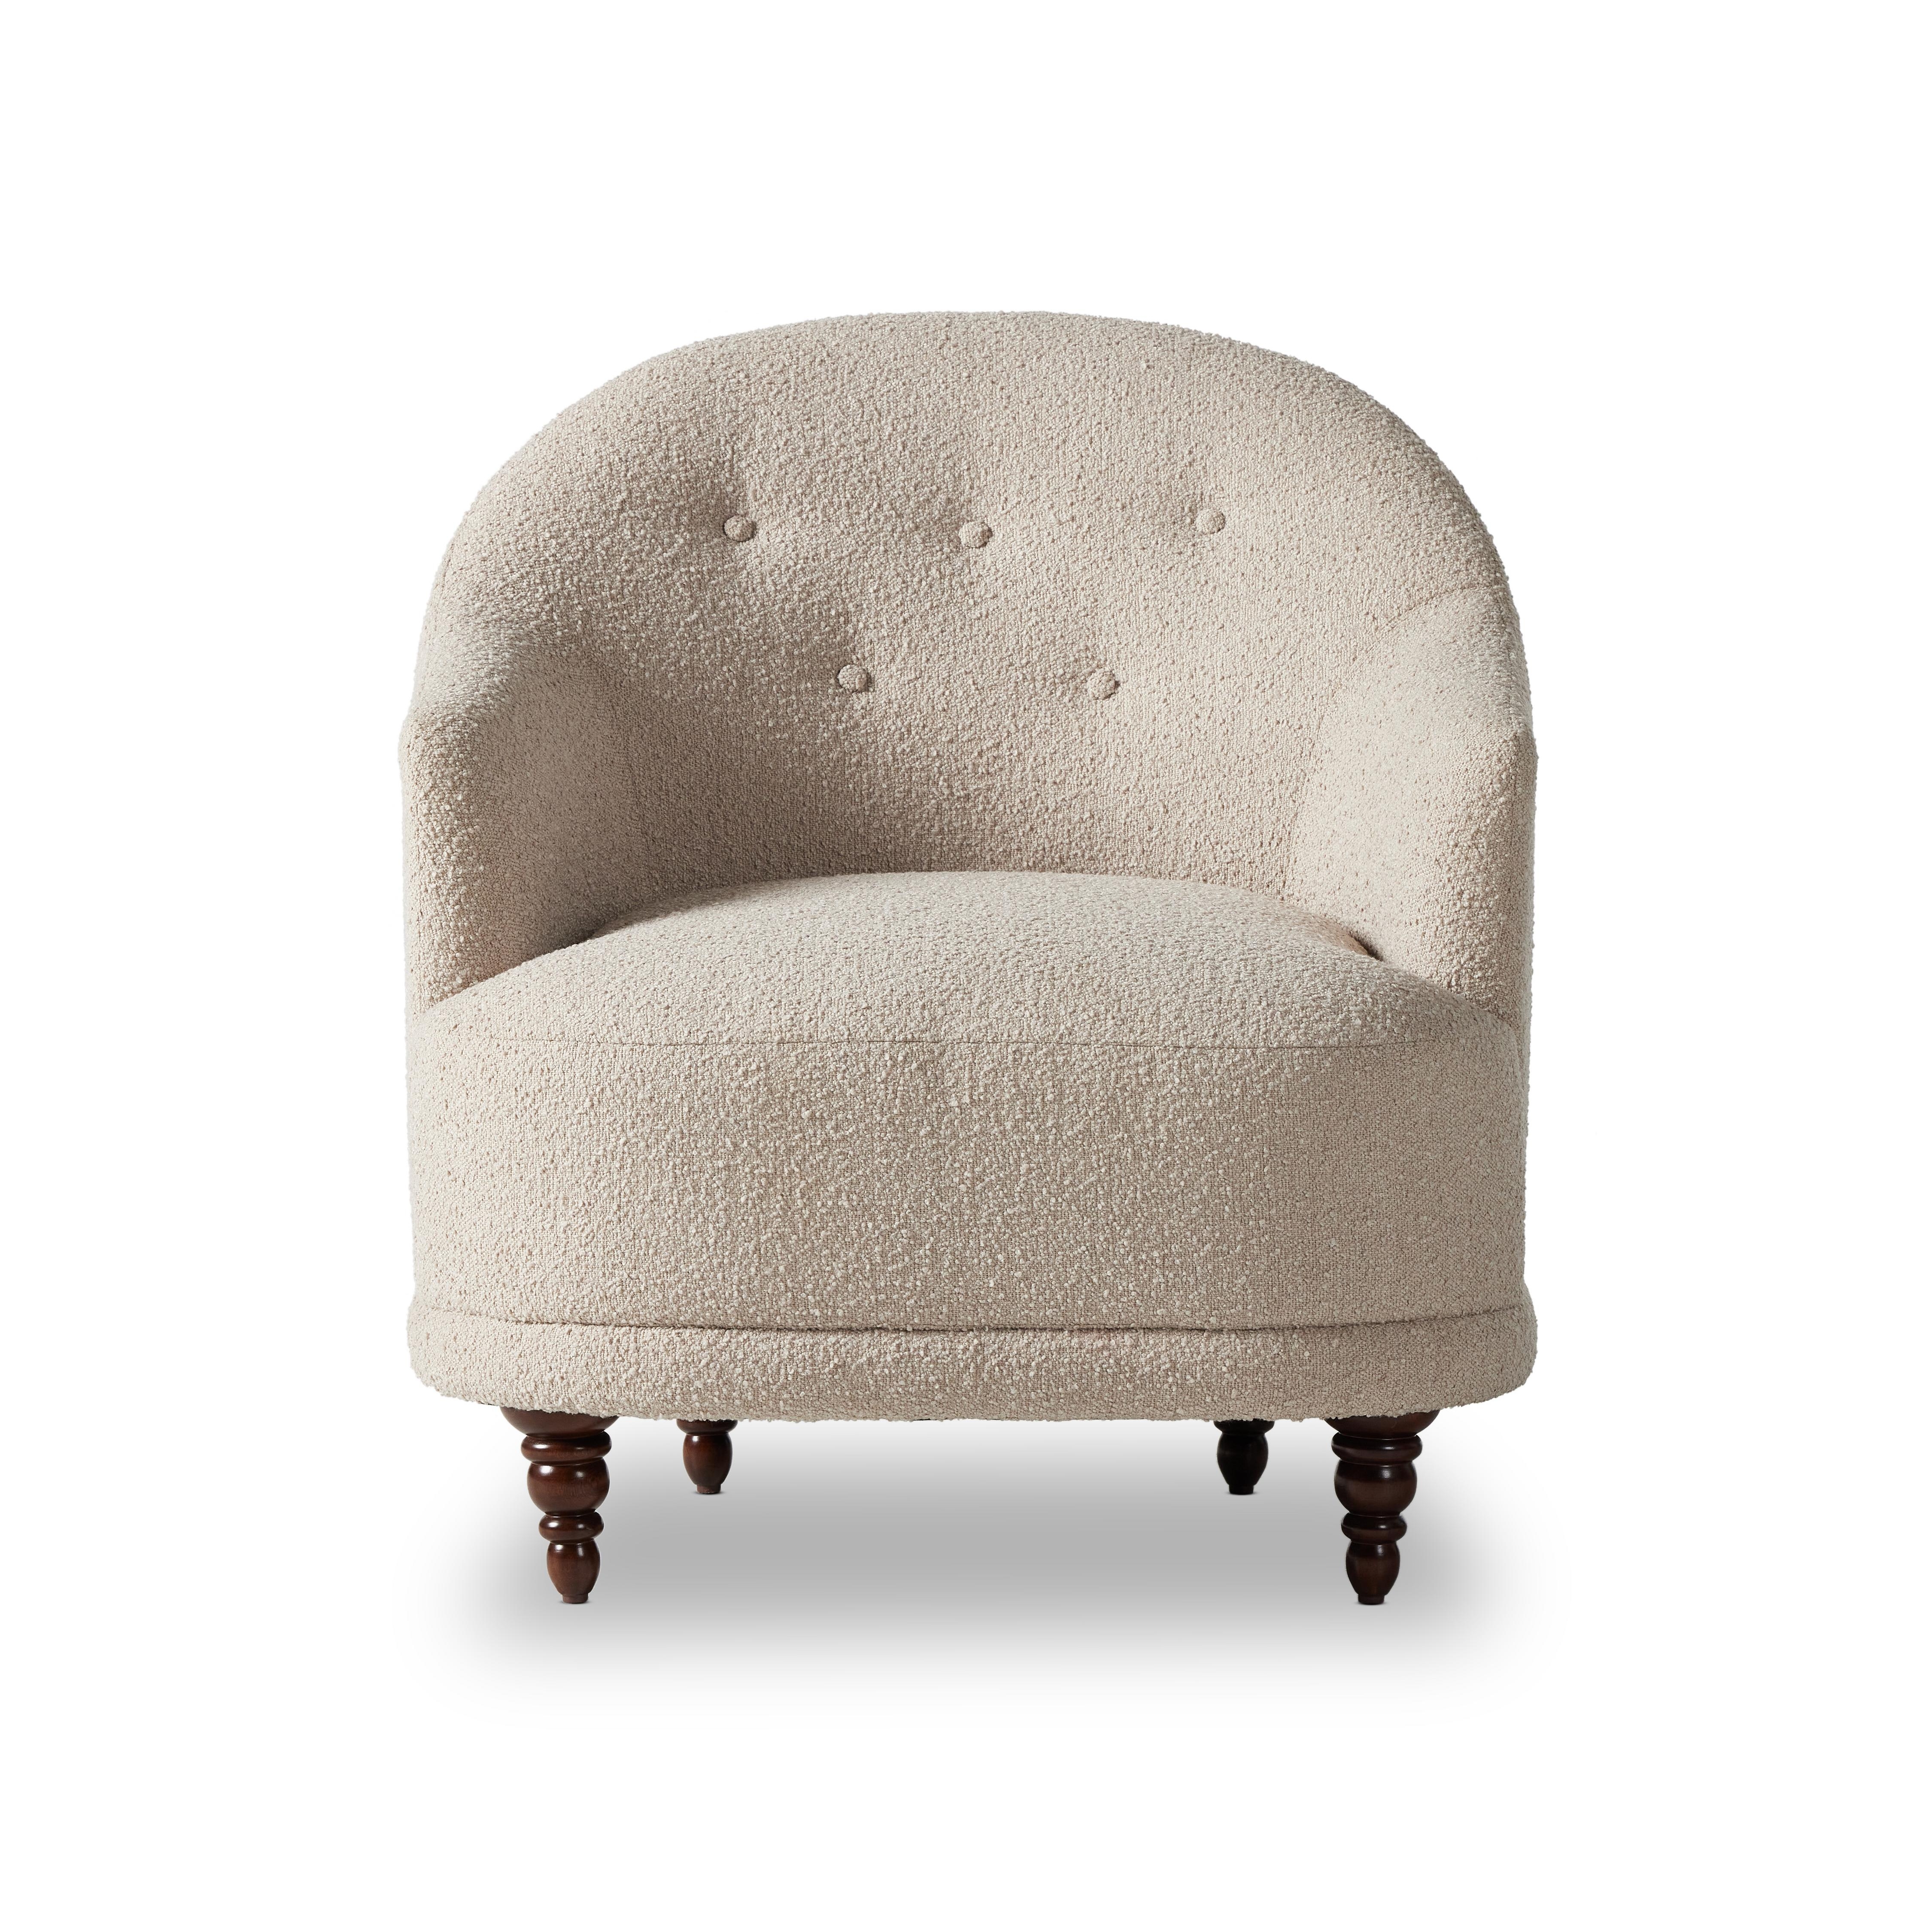 Marnie Chair-Knoll Sand - Image 3